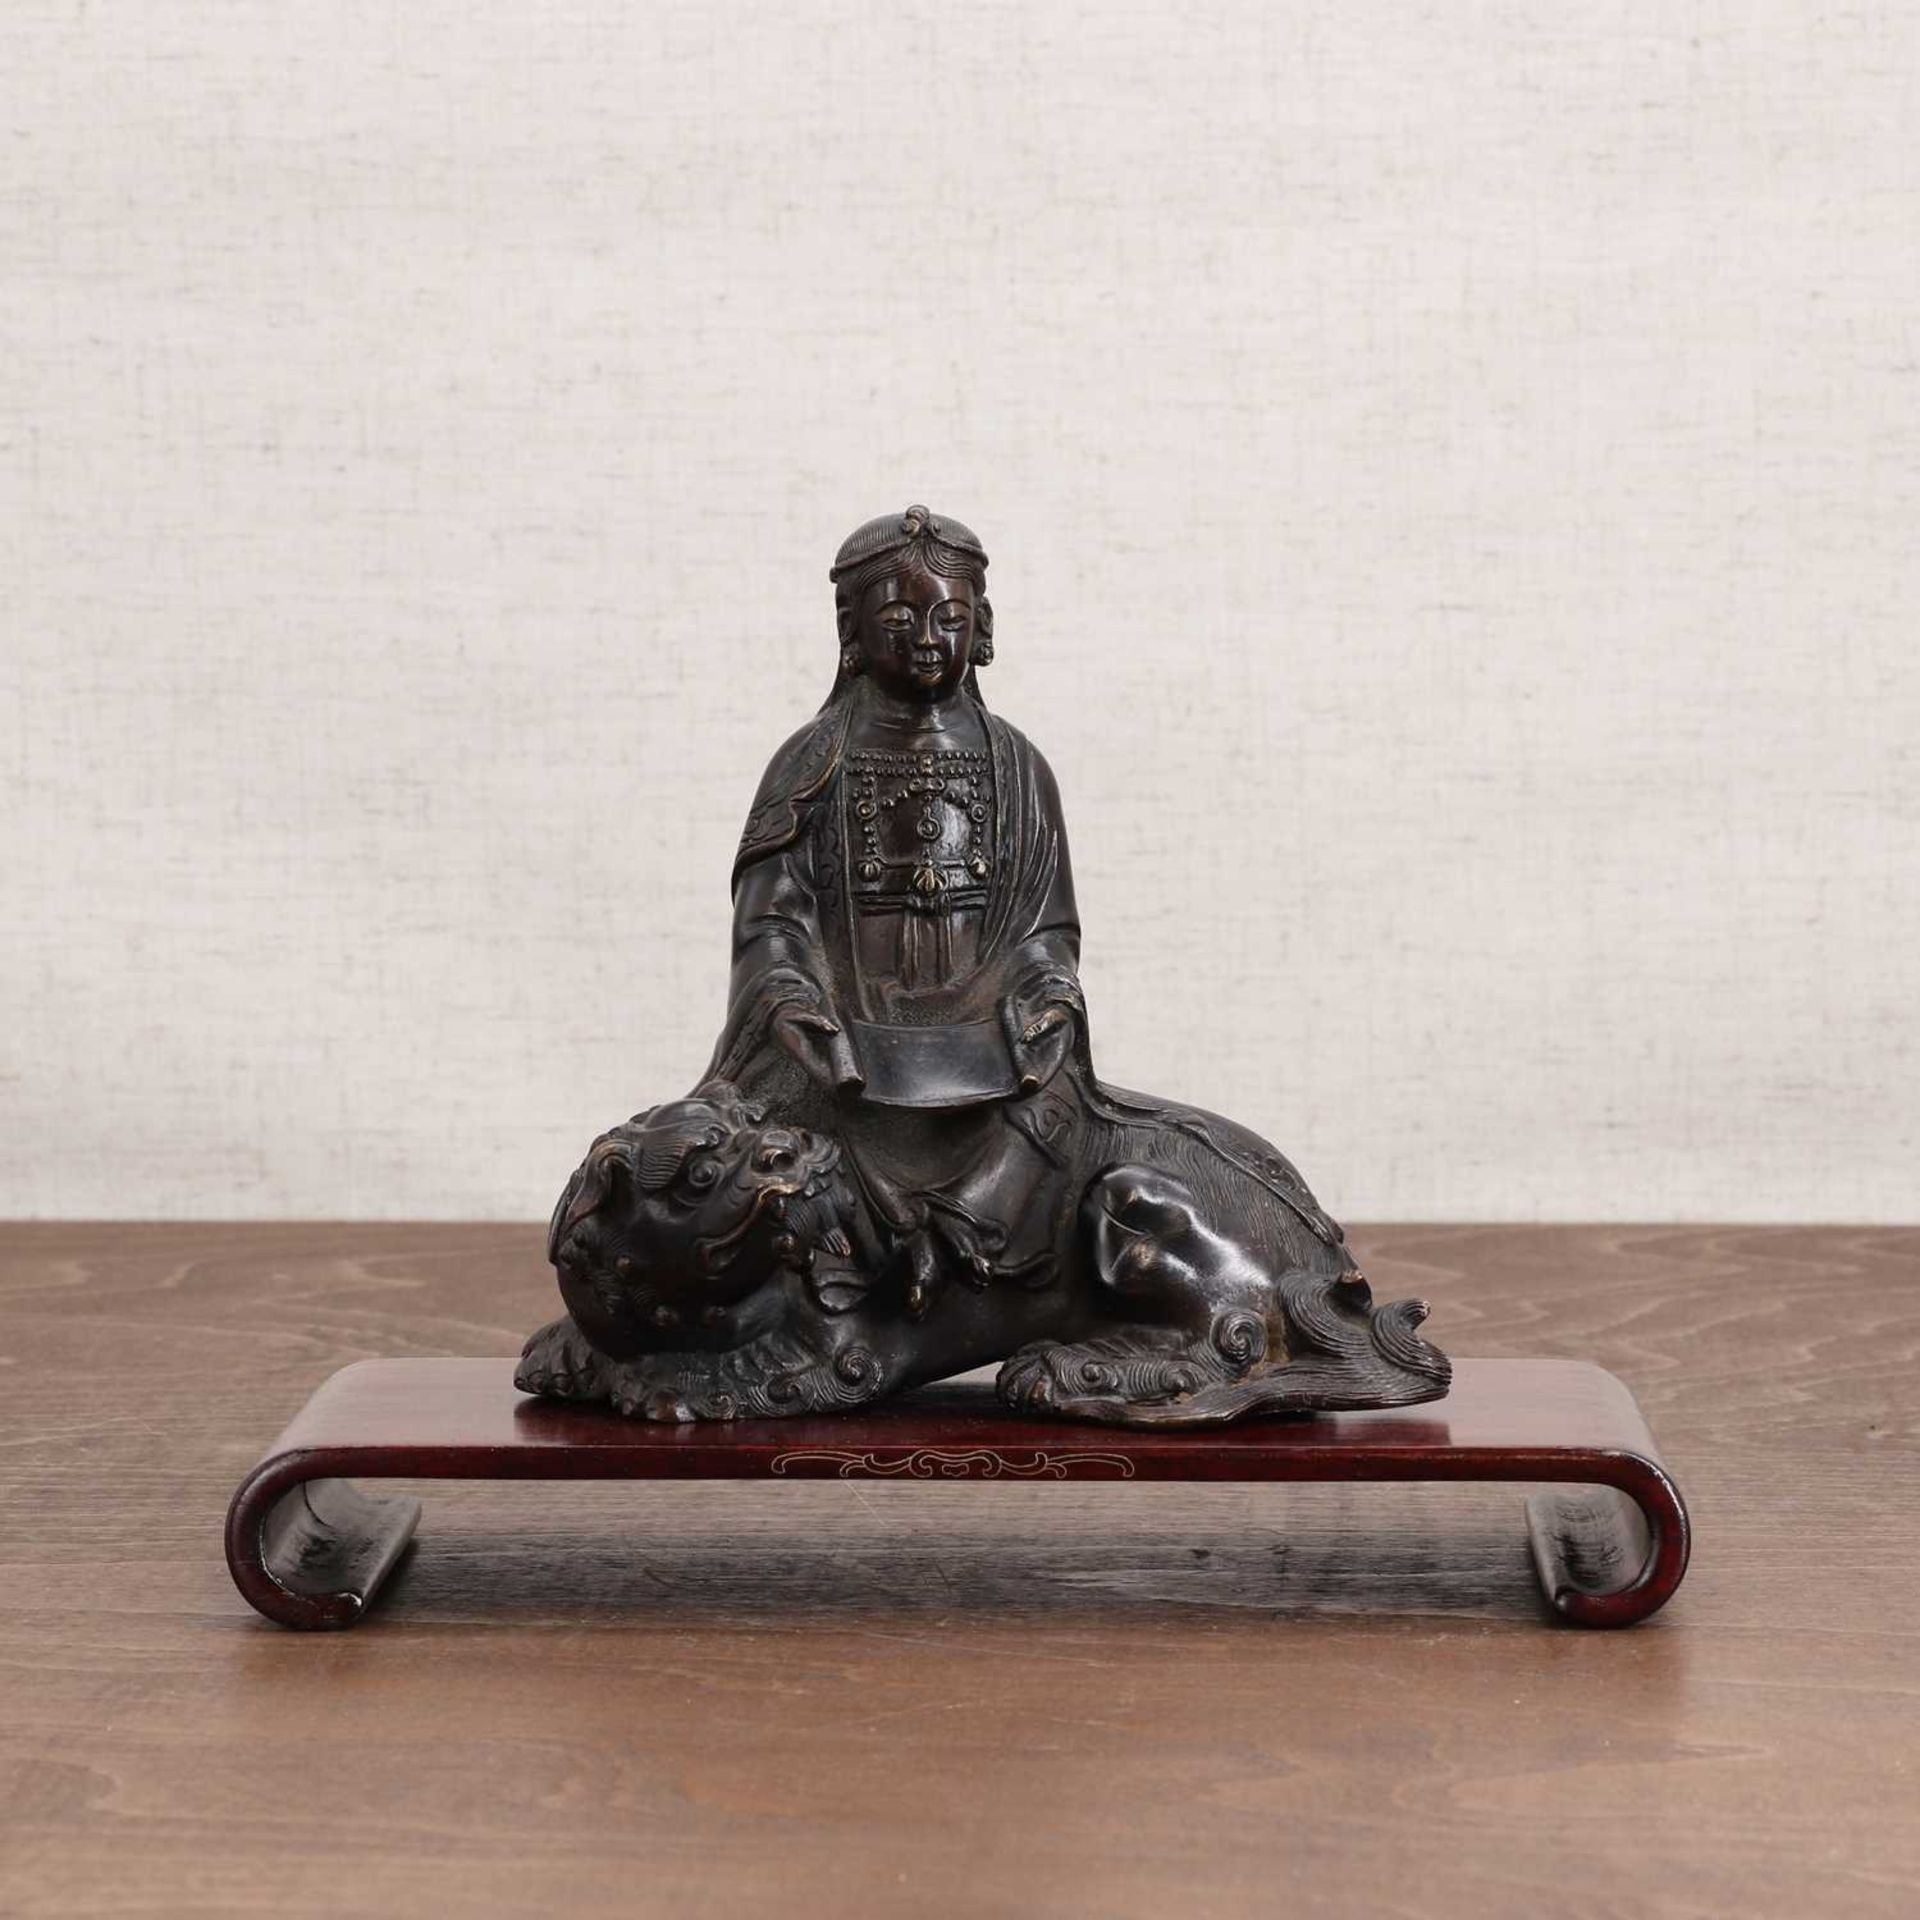 A Japanese bronze figure,